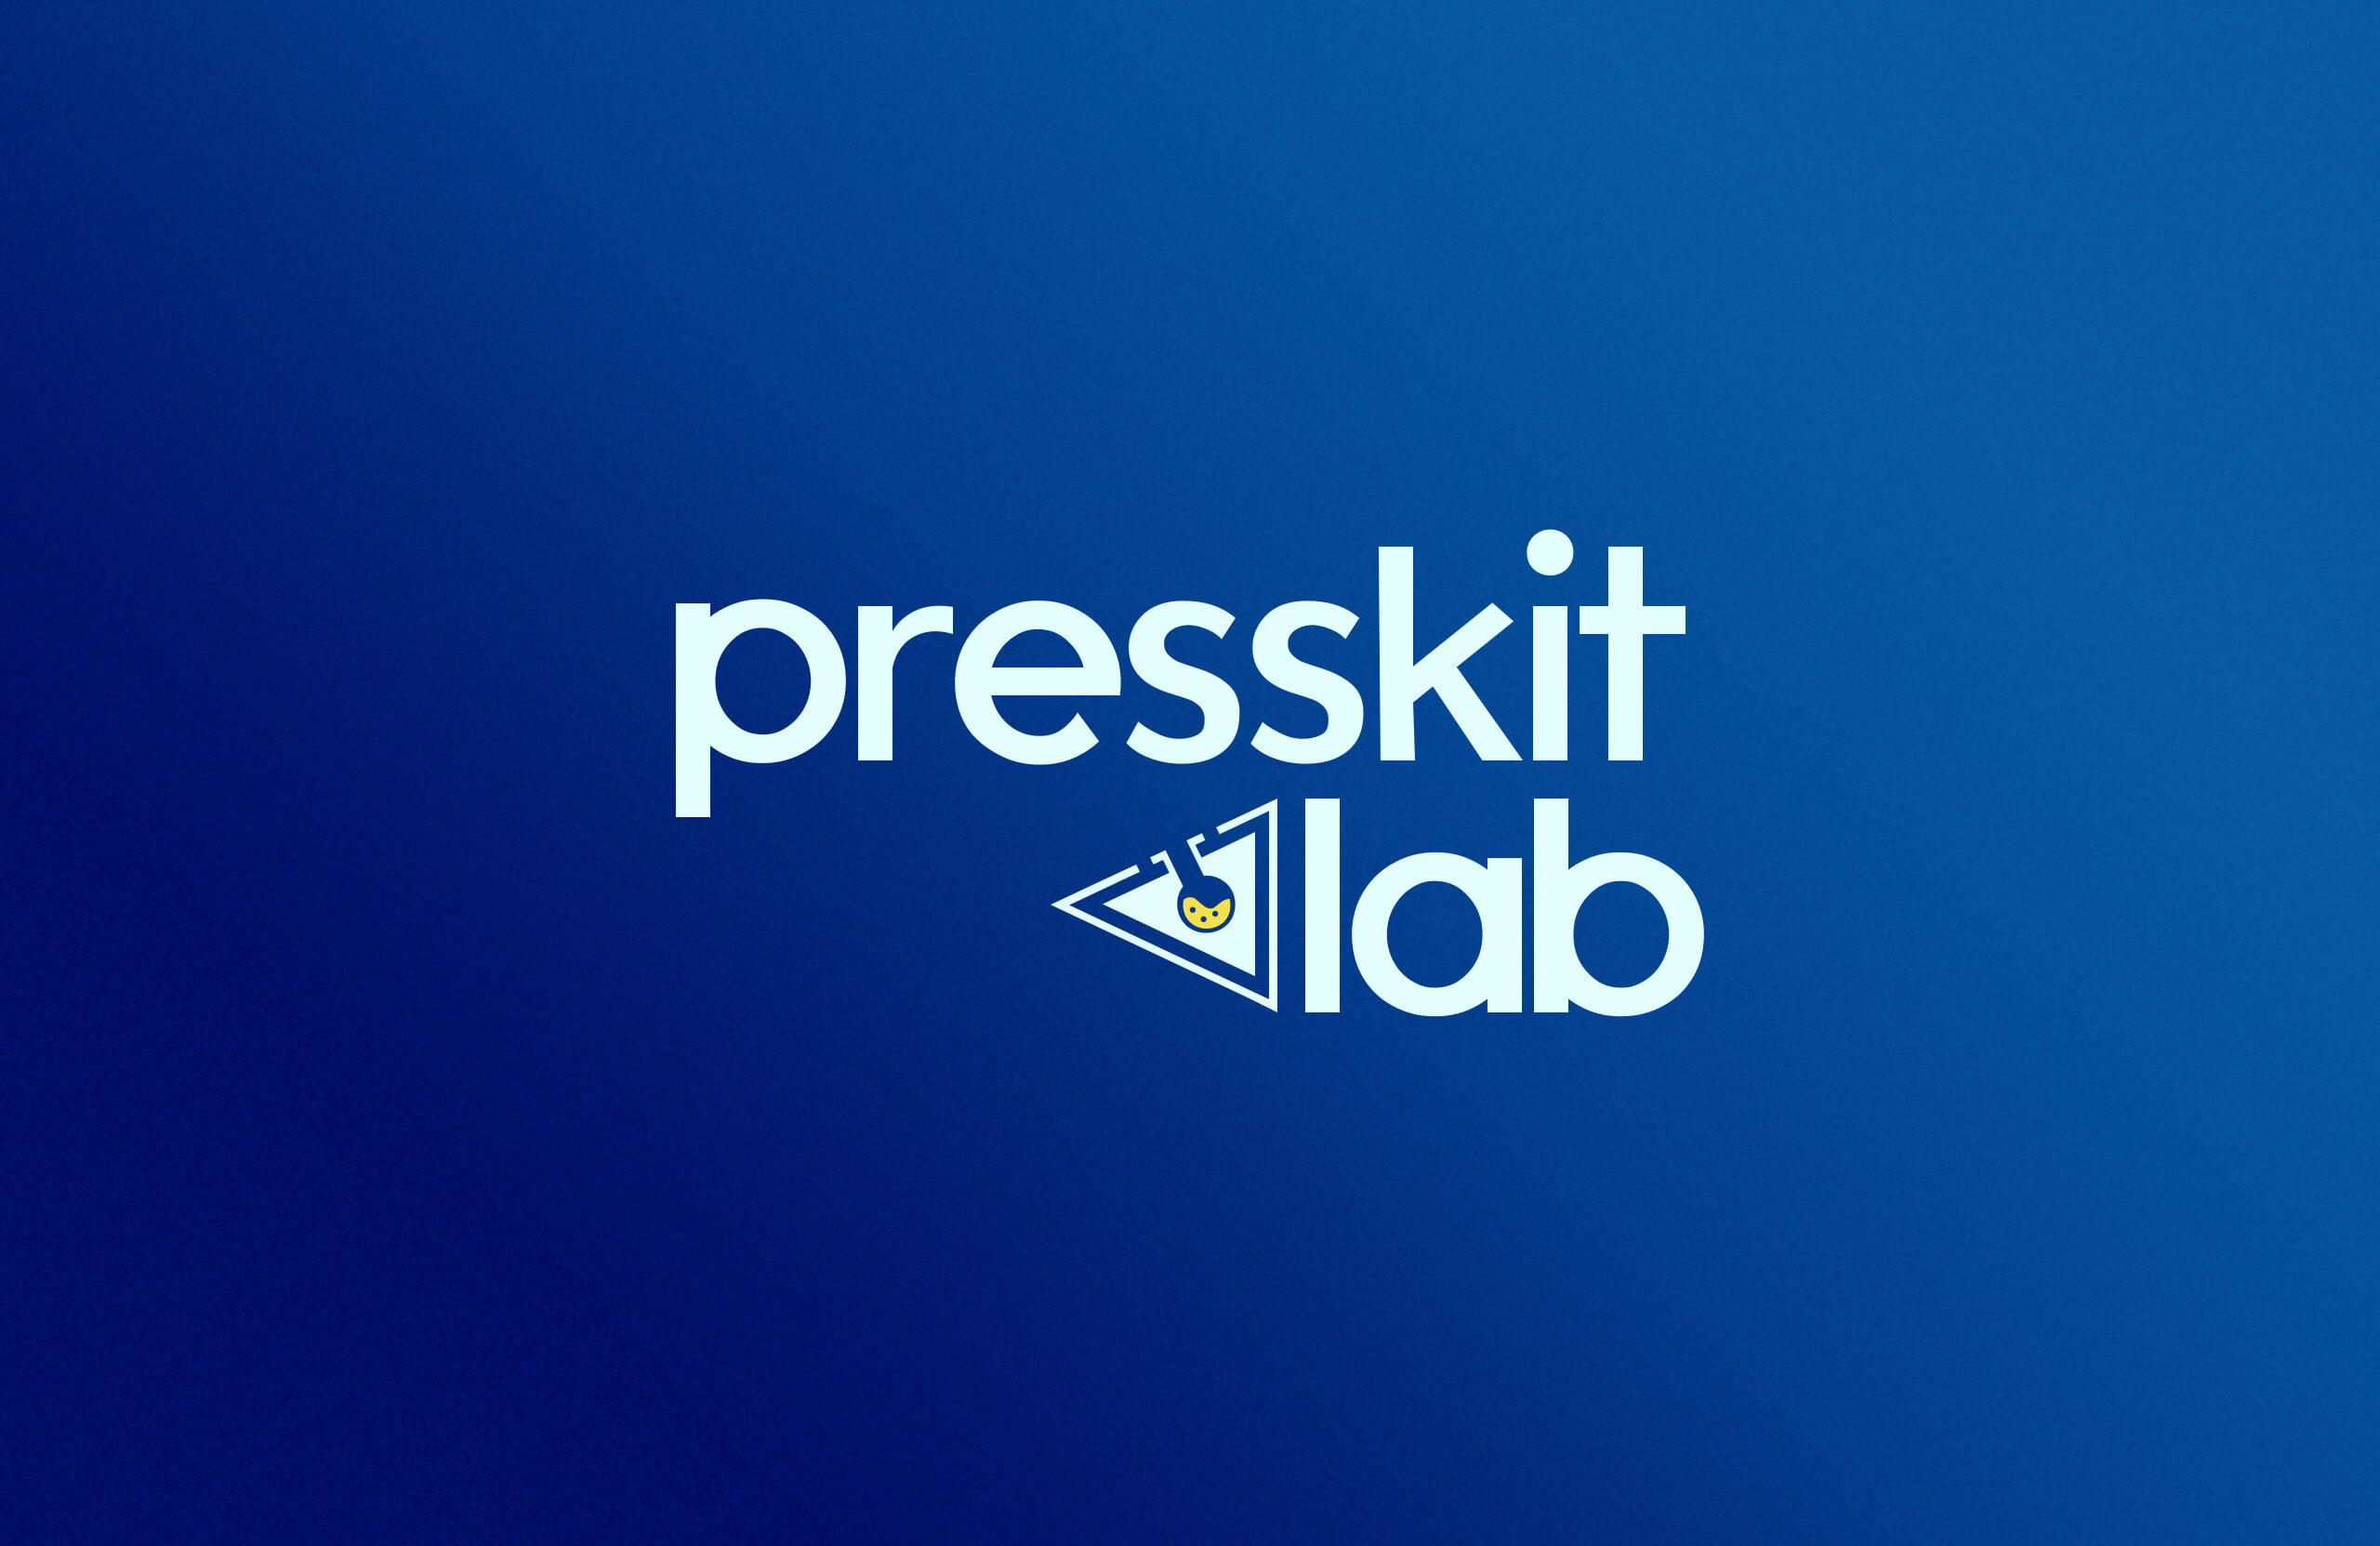 PressKit Lab Logo by Garett Southerton, Creative Brand Strategist of Garett® based in Long Island, New York